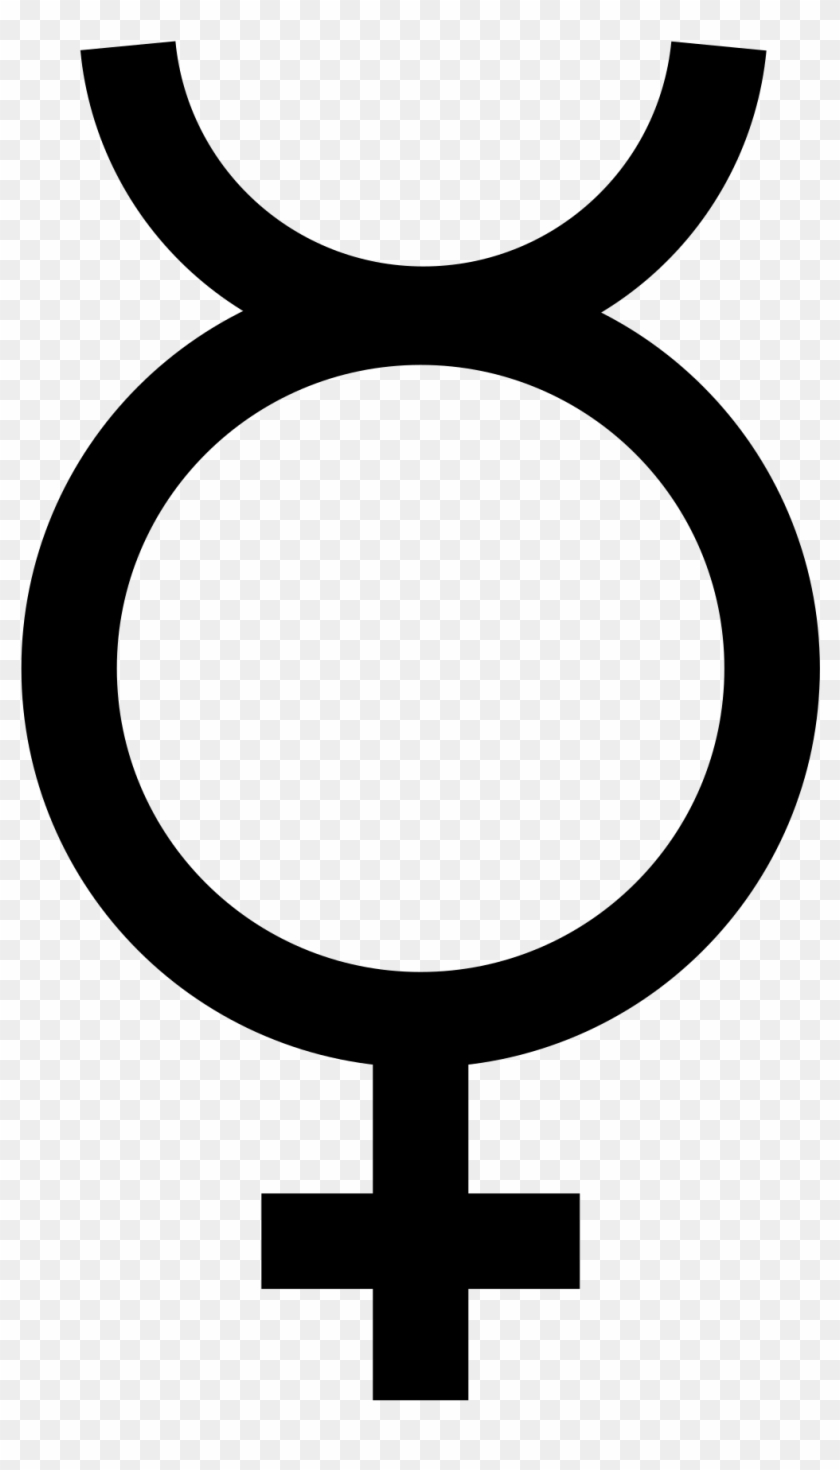 Planet Symbols Wikipedia Mercury - Mercury Alchemical Symbol Clipart #349679